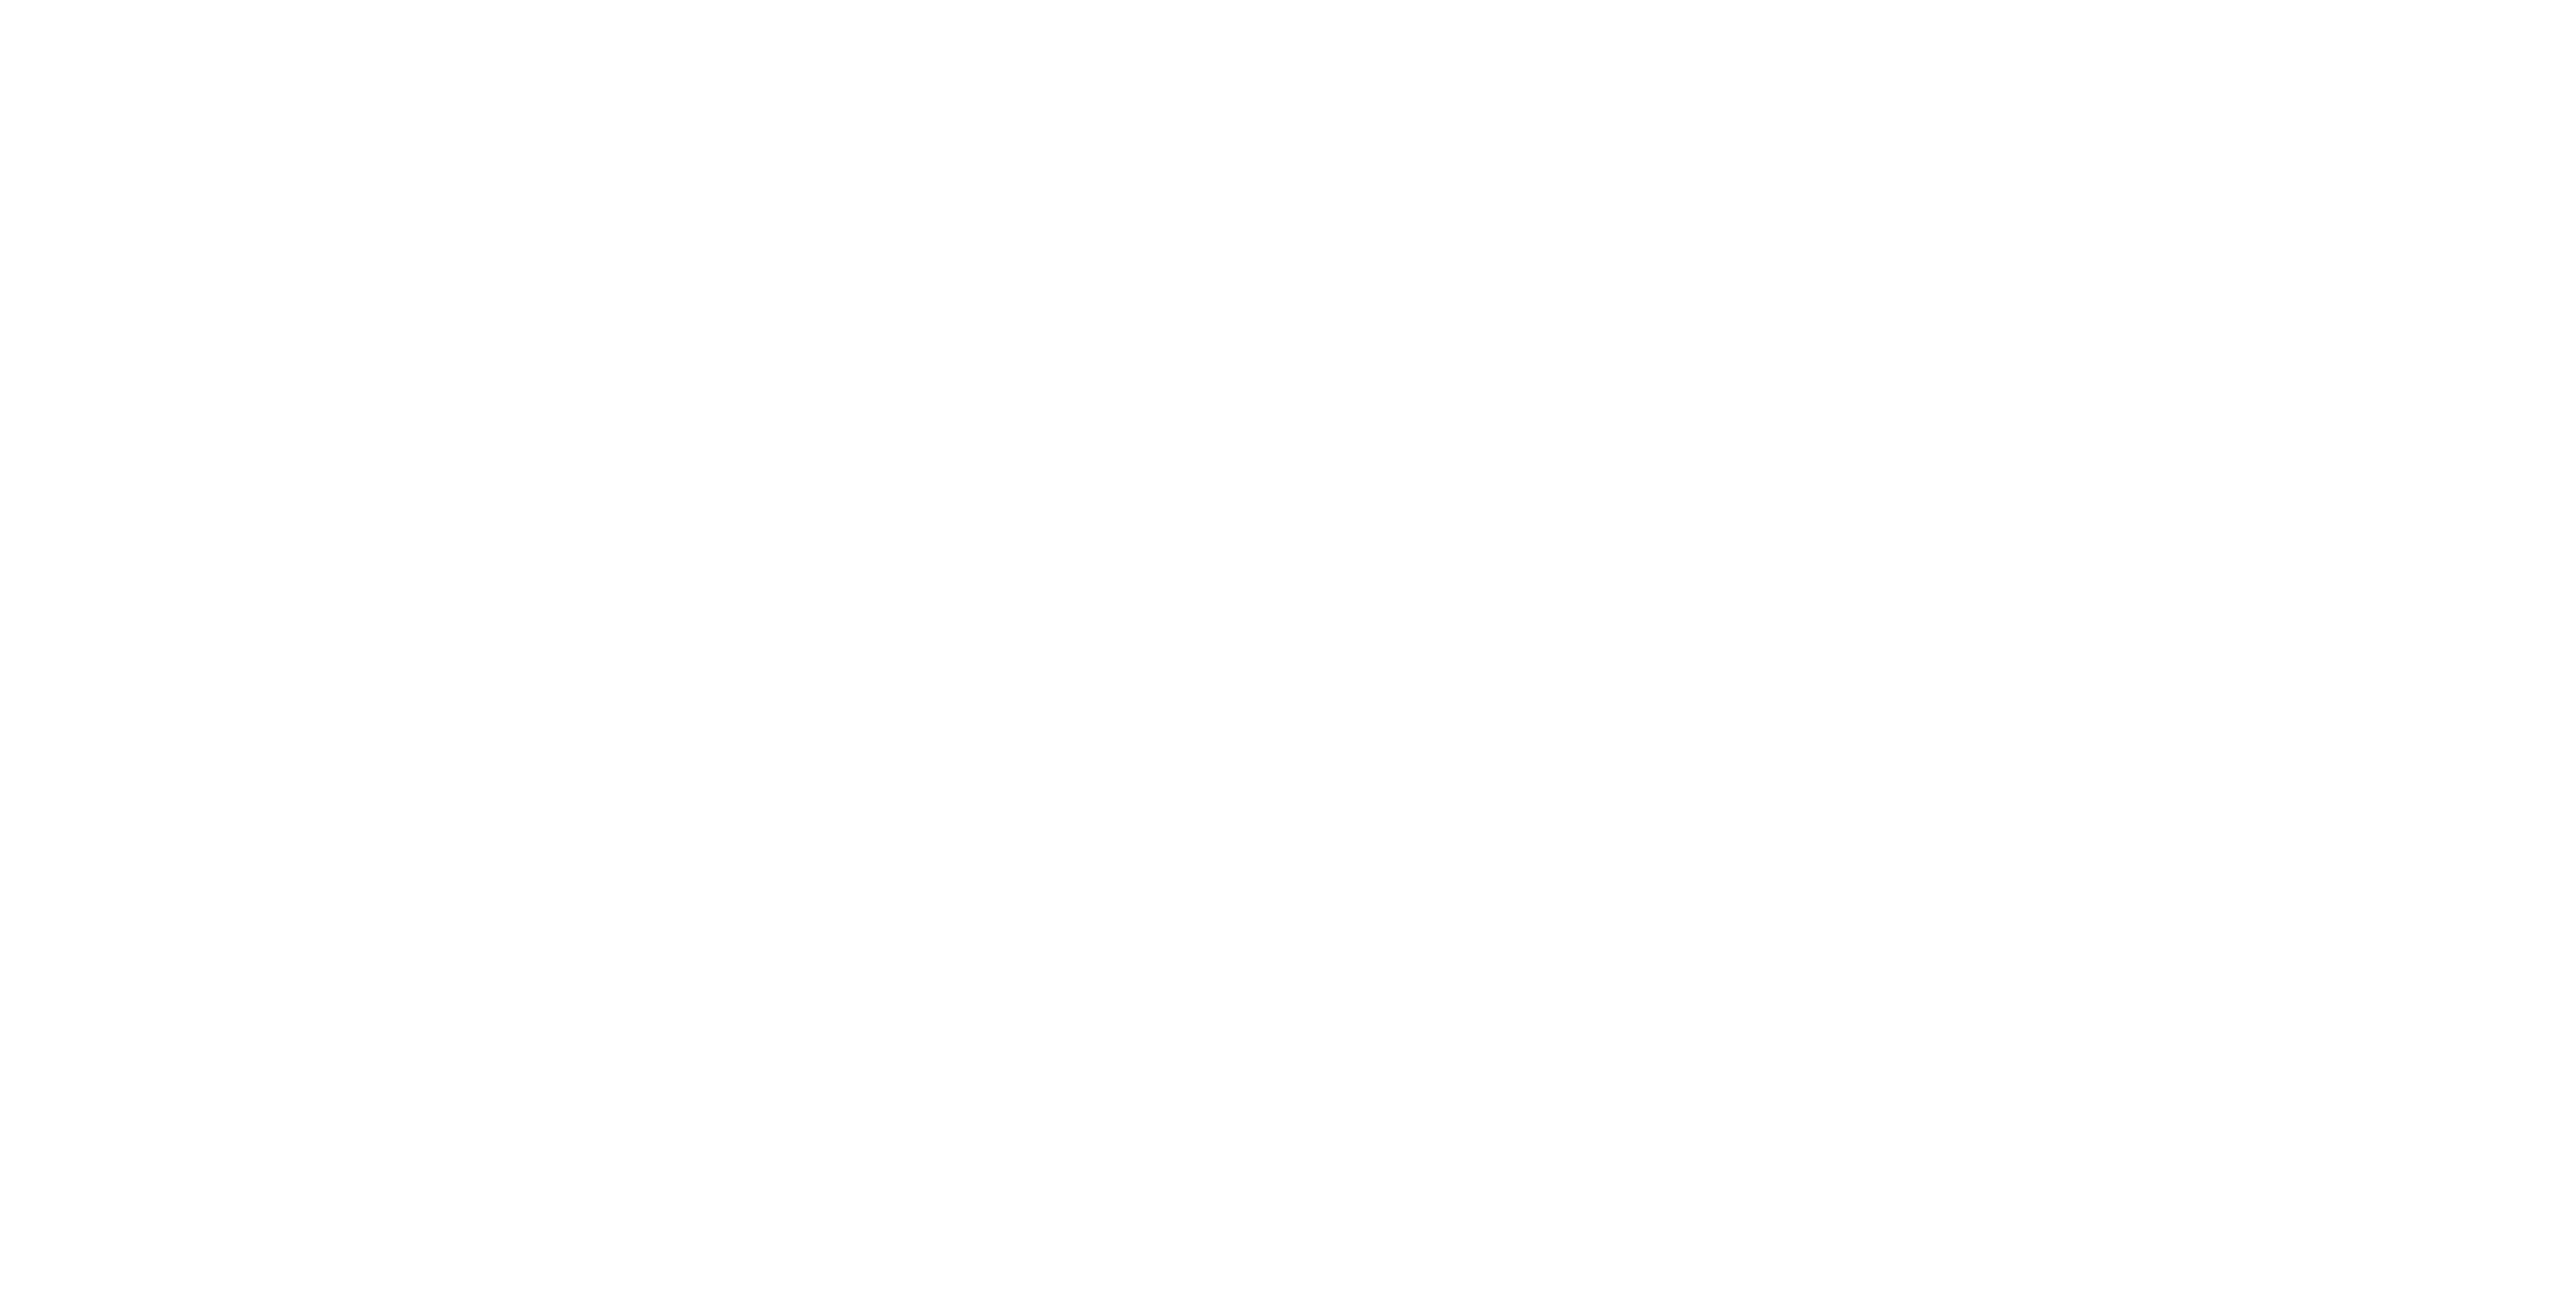 Brives Constructions